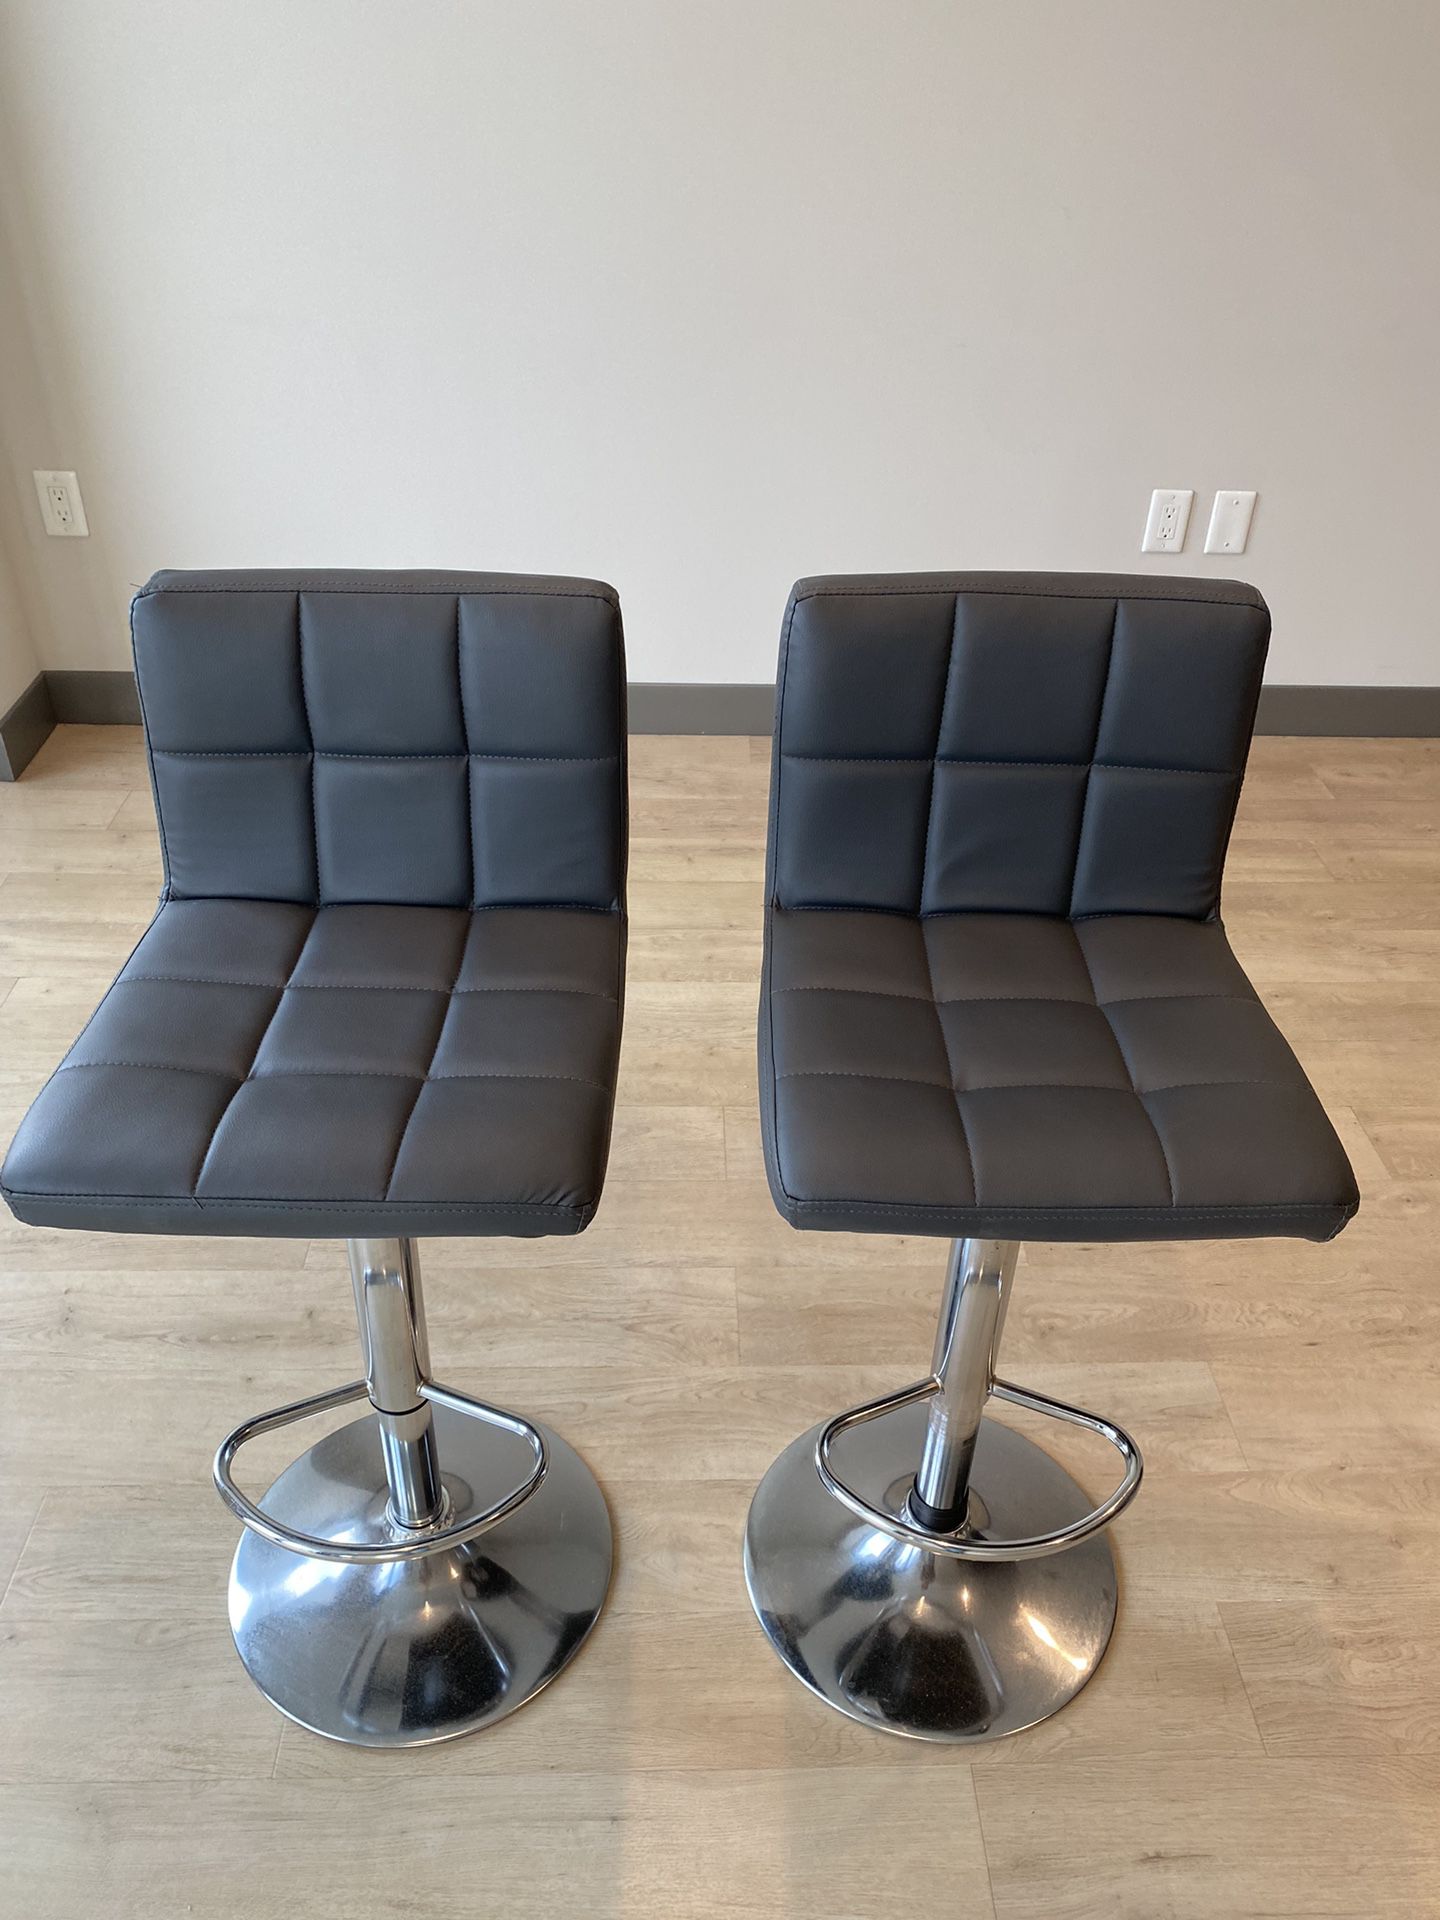 Barstool Chairs